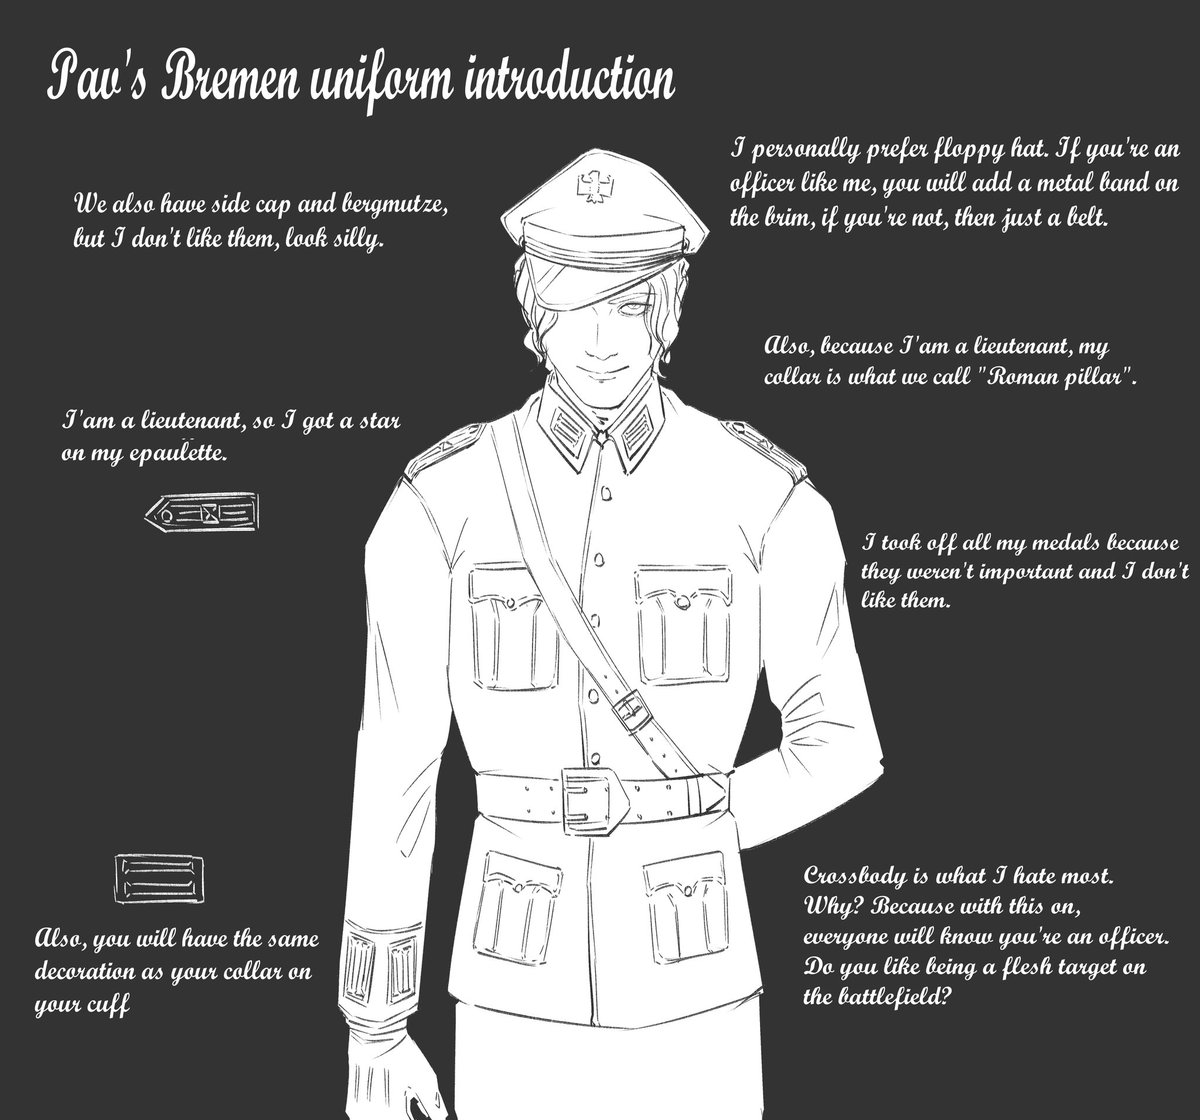 Pav's Bremen uniform introduction
(not really based in Bremen)